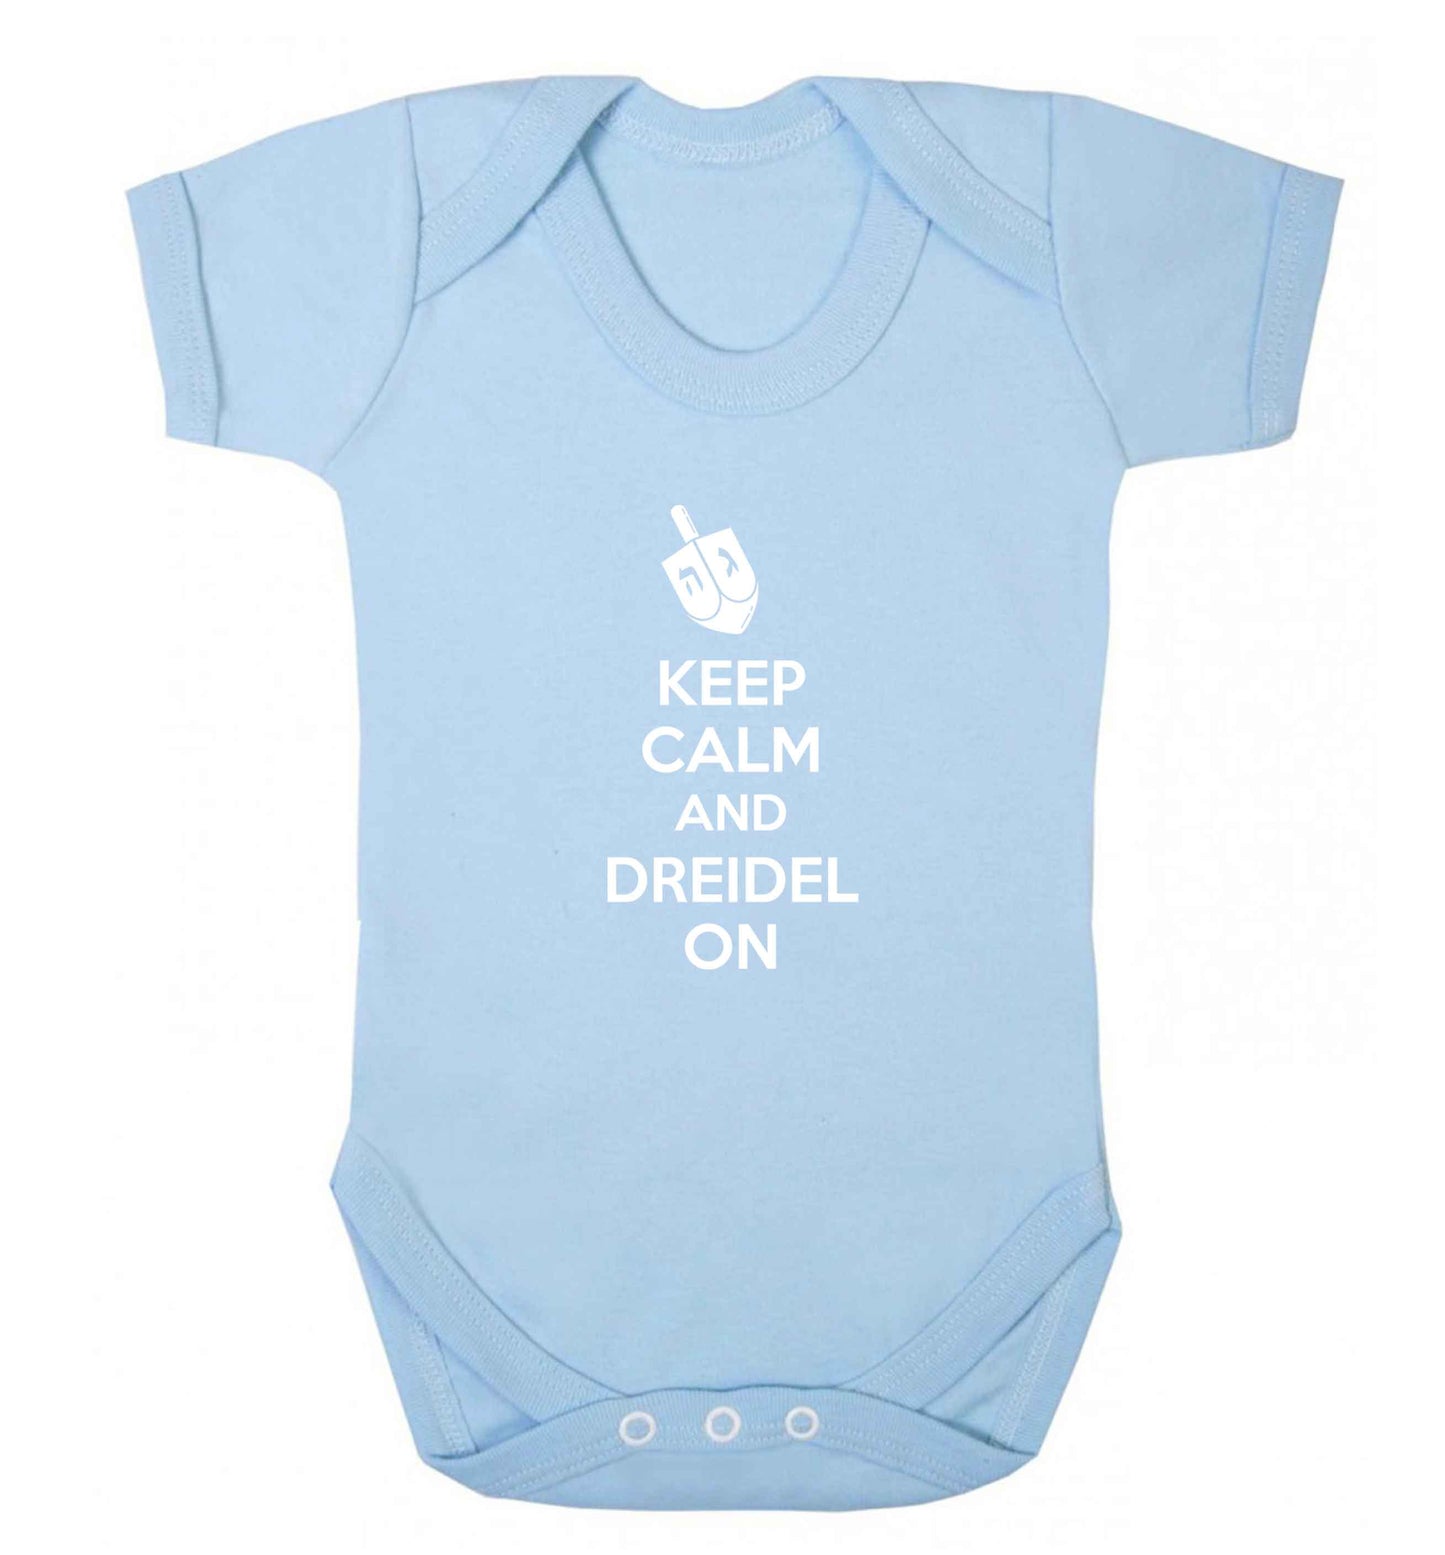 Keep calm and dreidel on baby vest pale blue 18-24 months